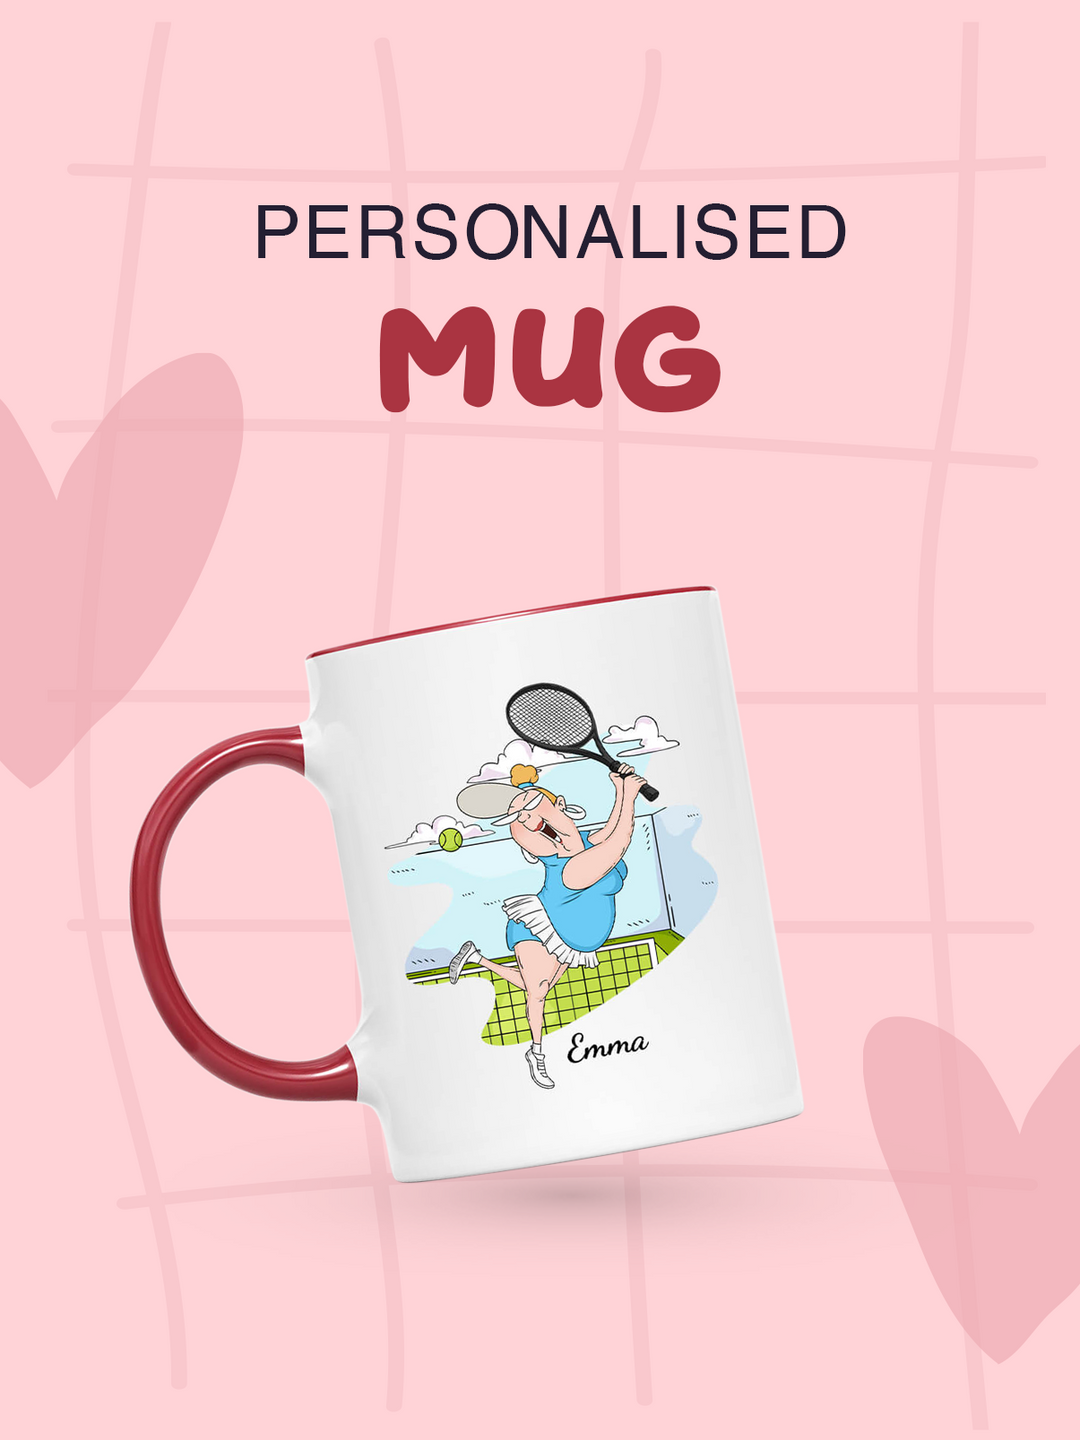 Personal Chic UK Personalised Mug_bcc53dcb 6f75 4f67 9891 5a45164899bf